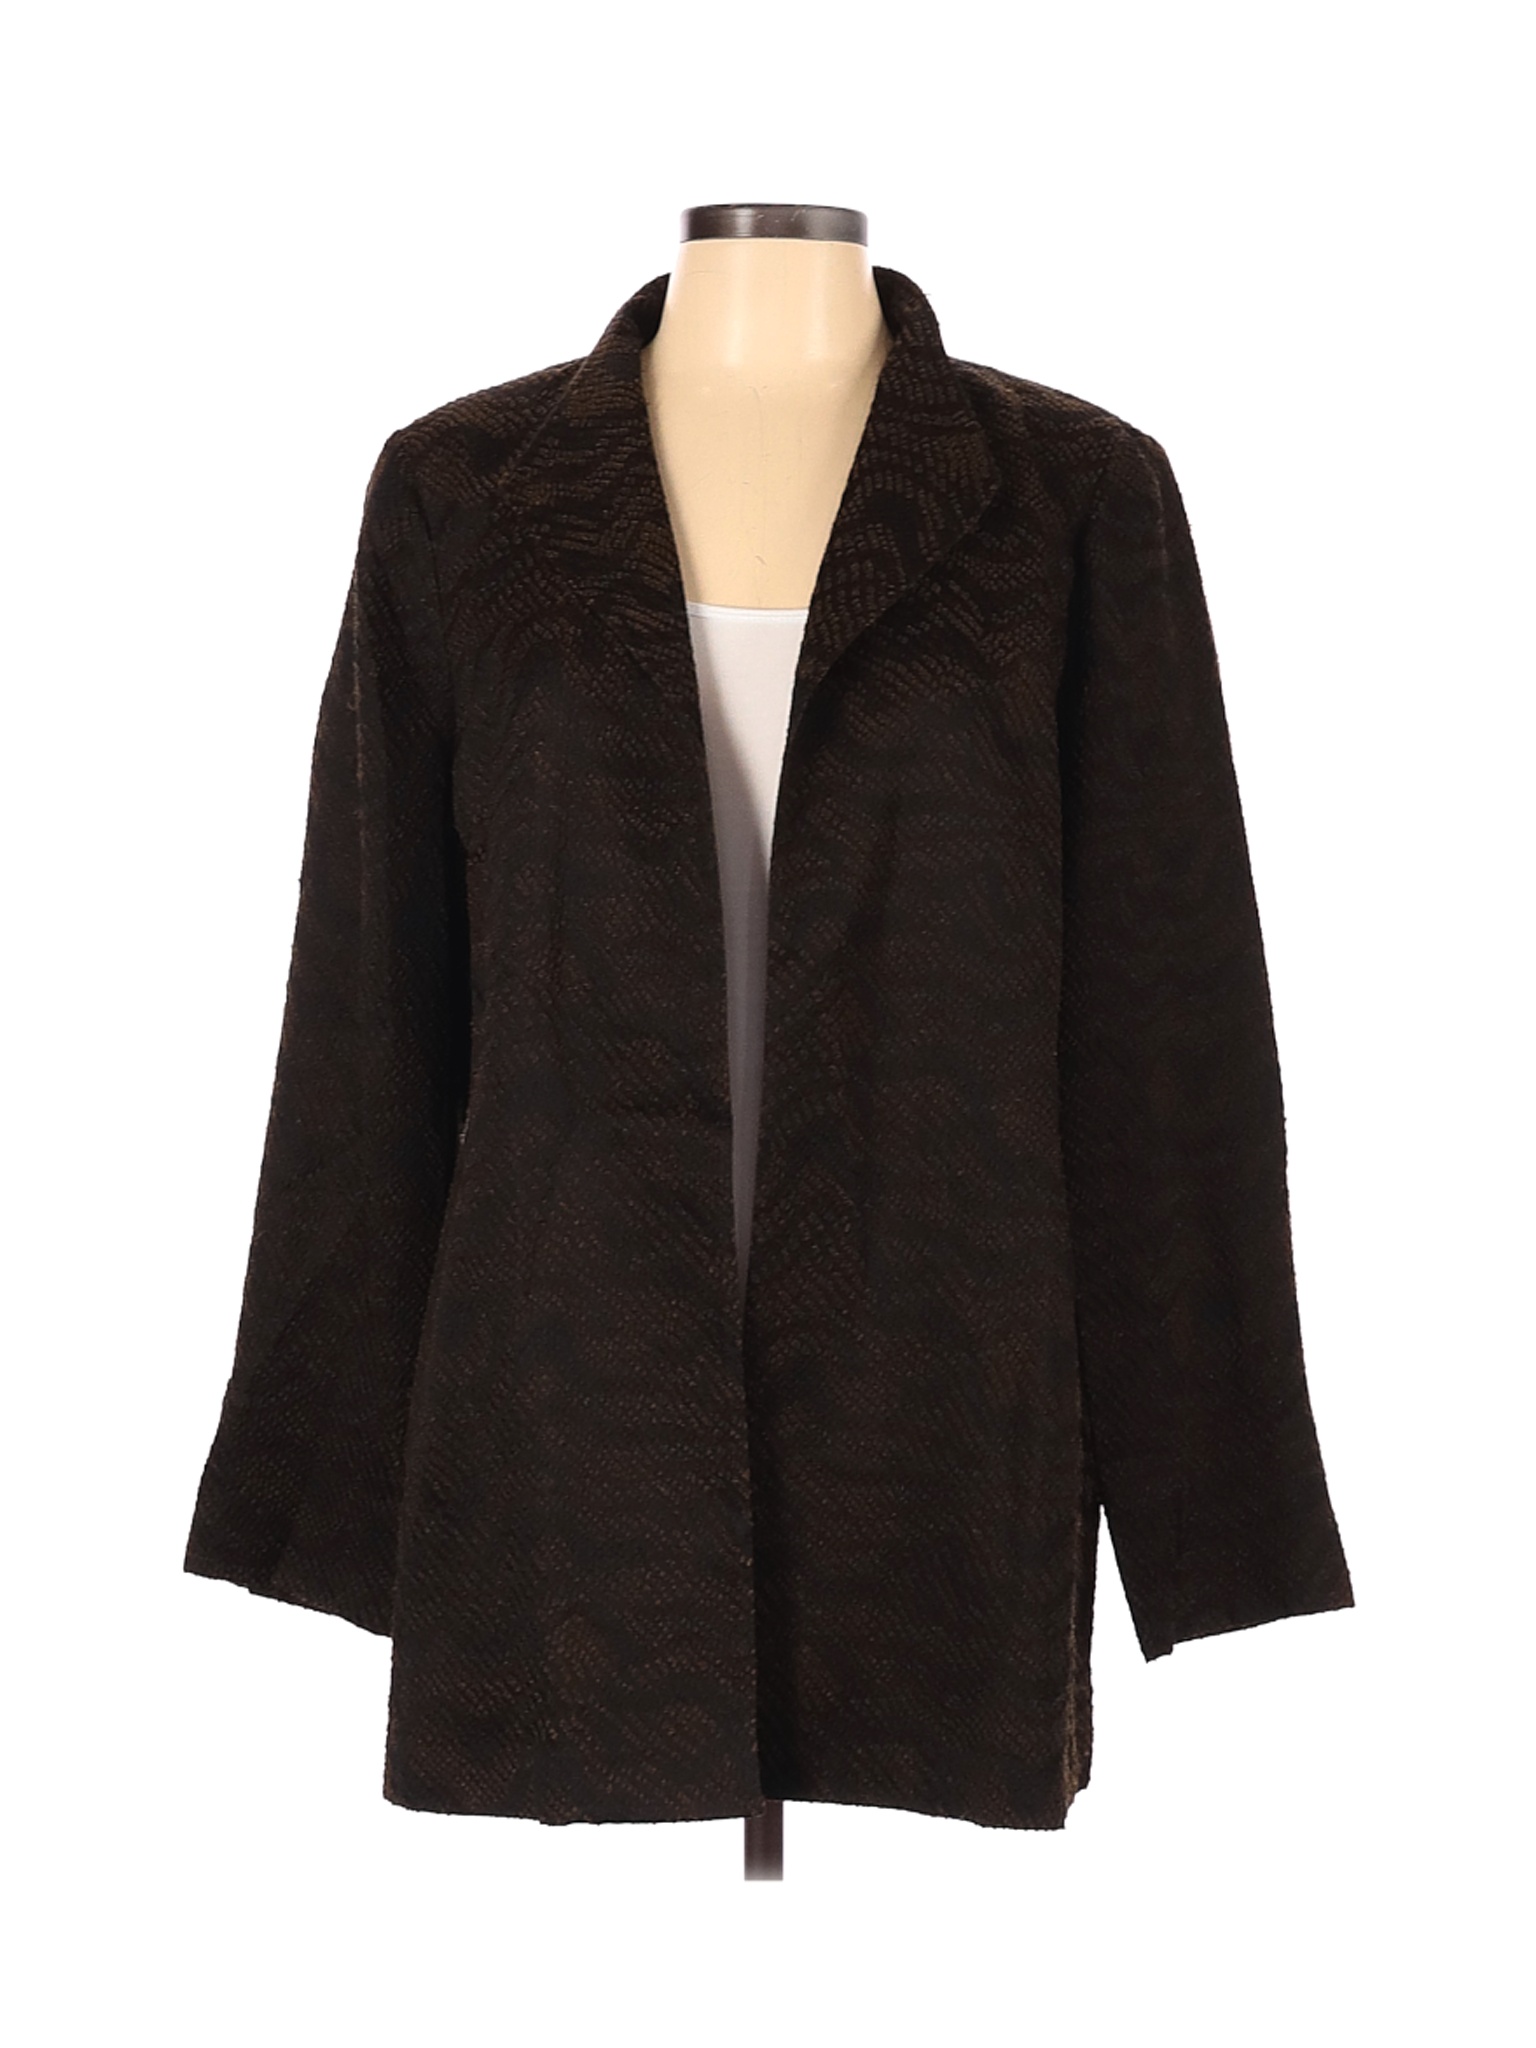 NWT Eileen Fisher Women Black Silk Blazer L | eBay